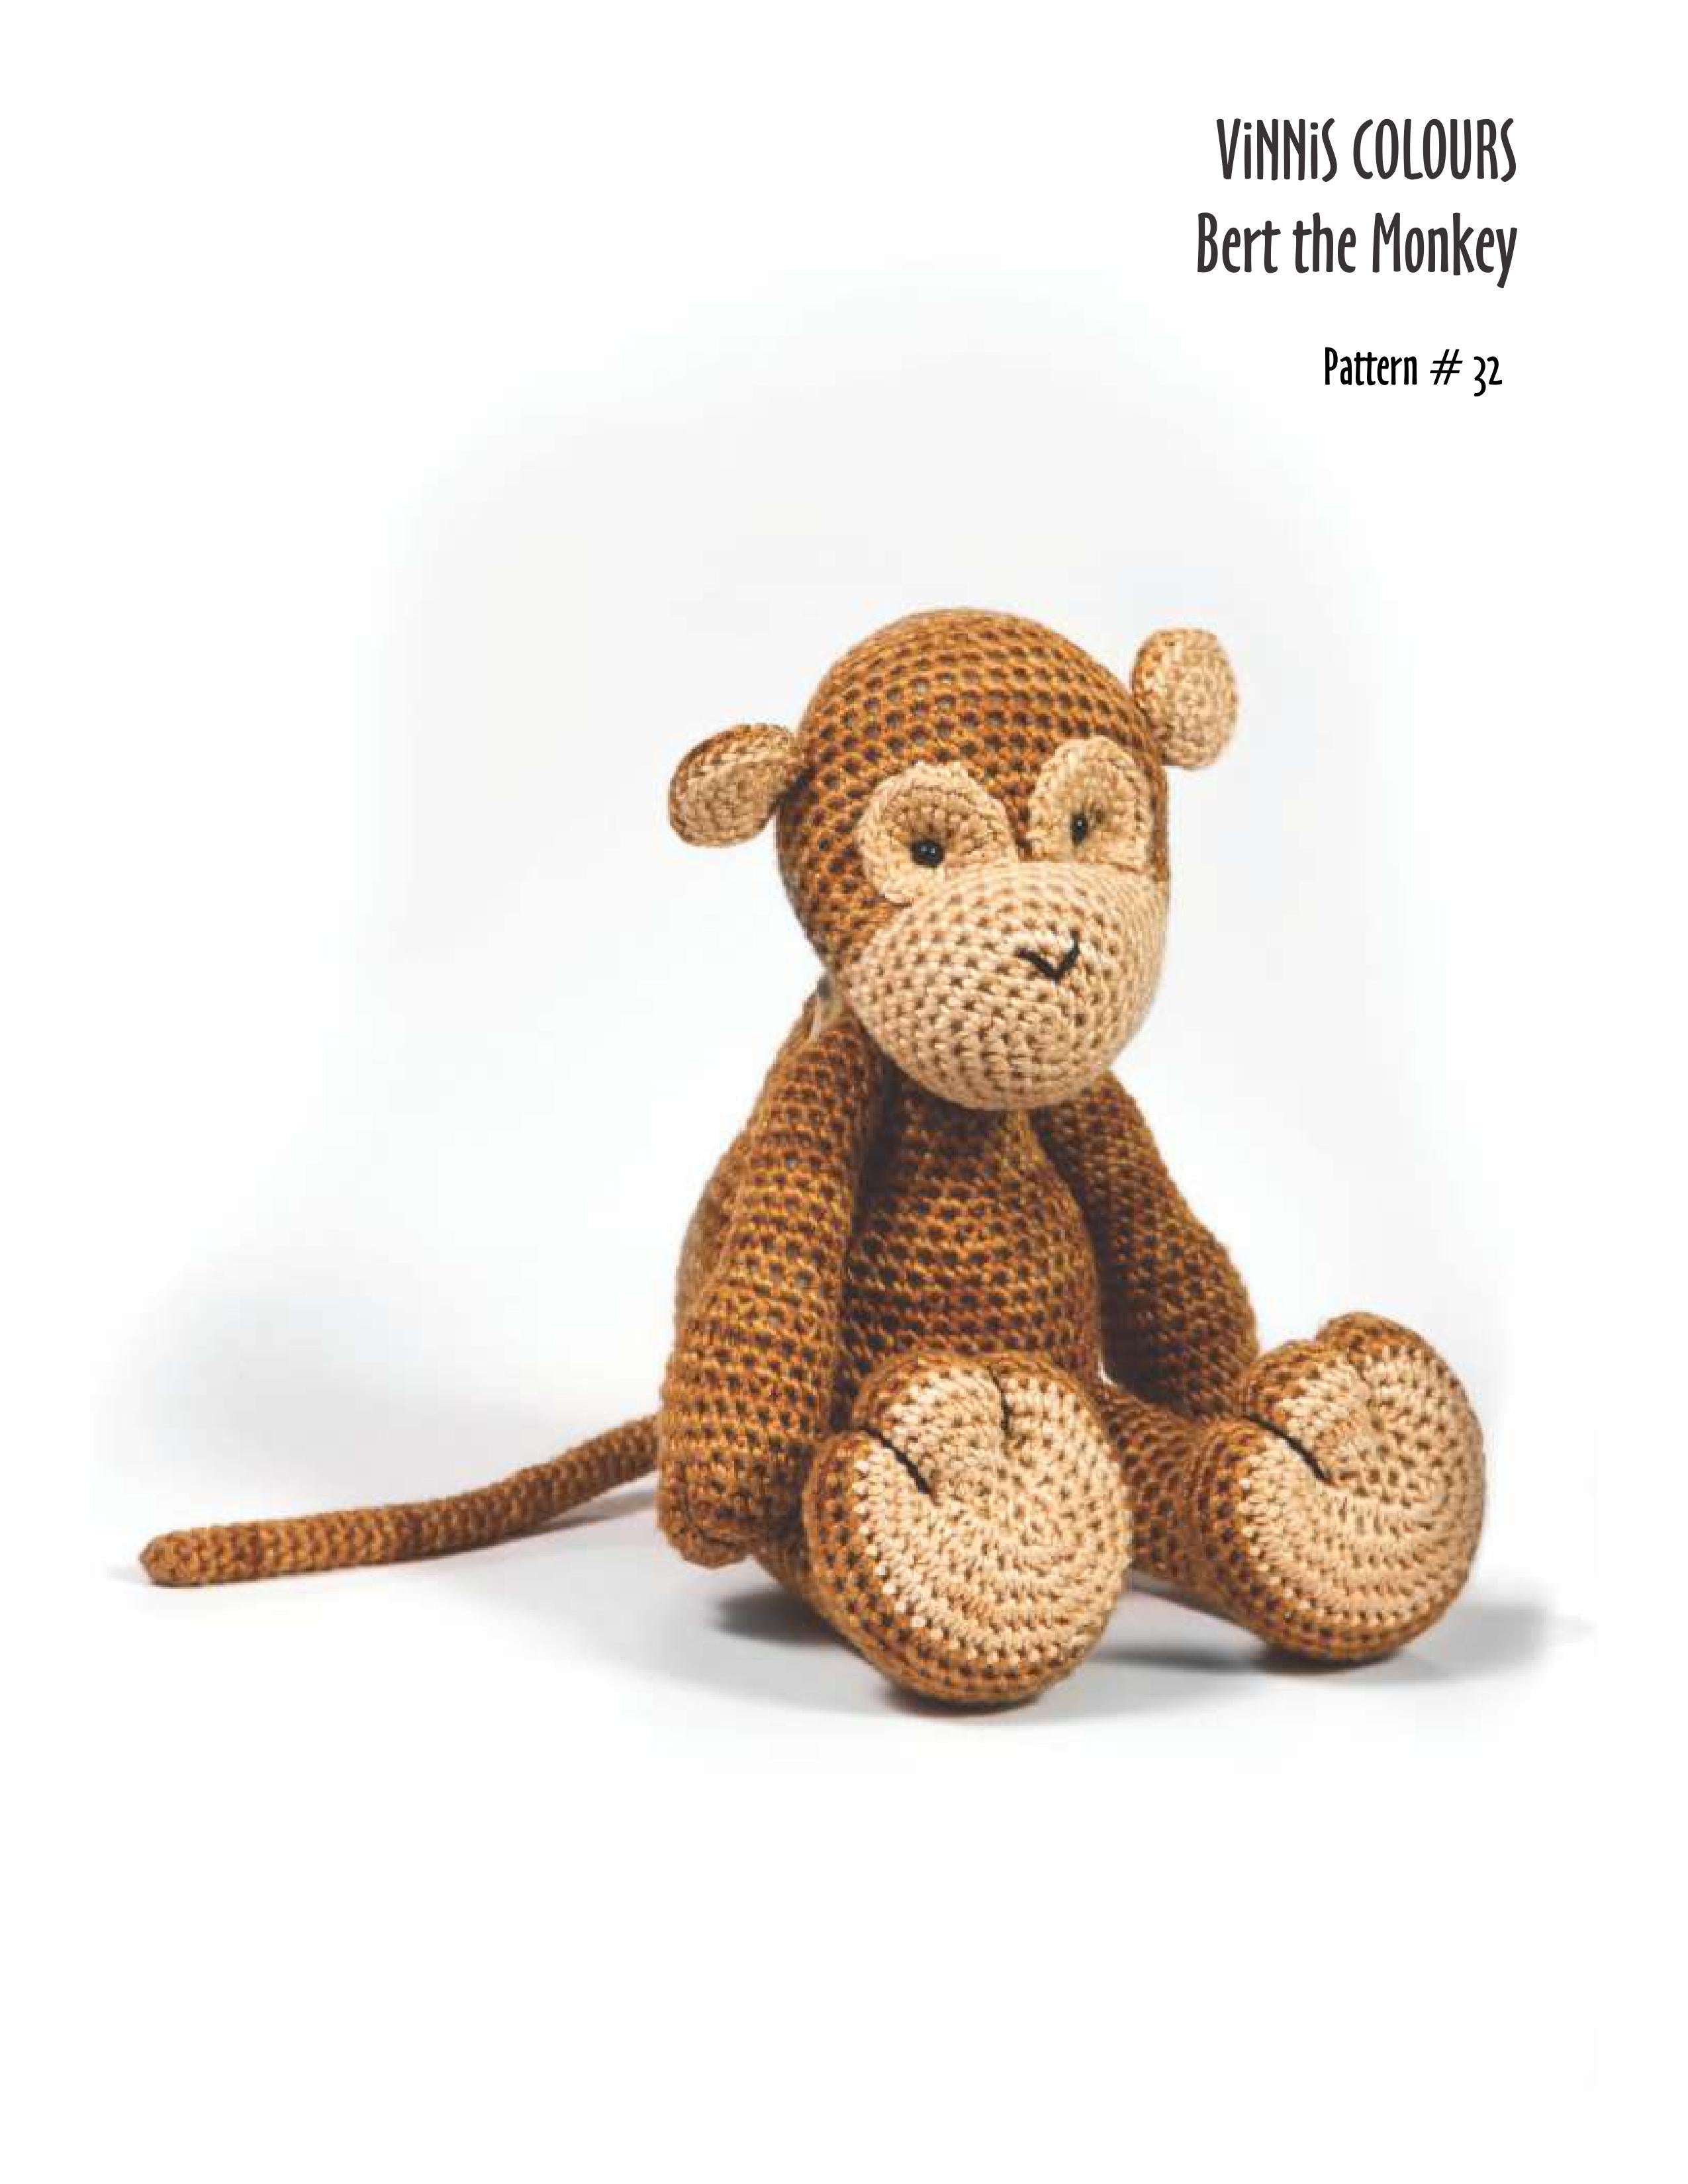 VCDL - P032 - Bert the Monkey